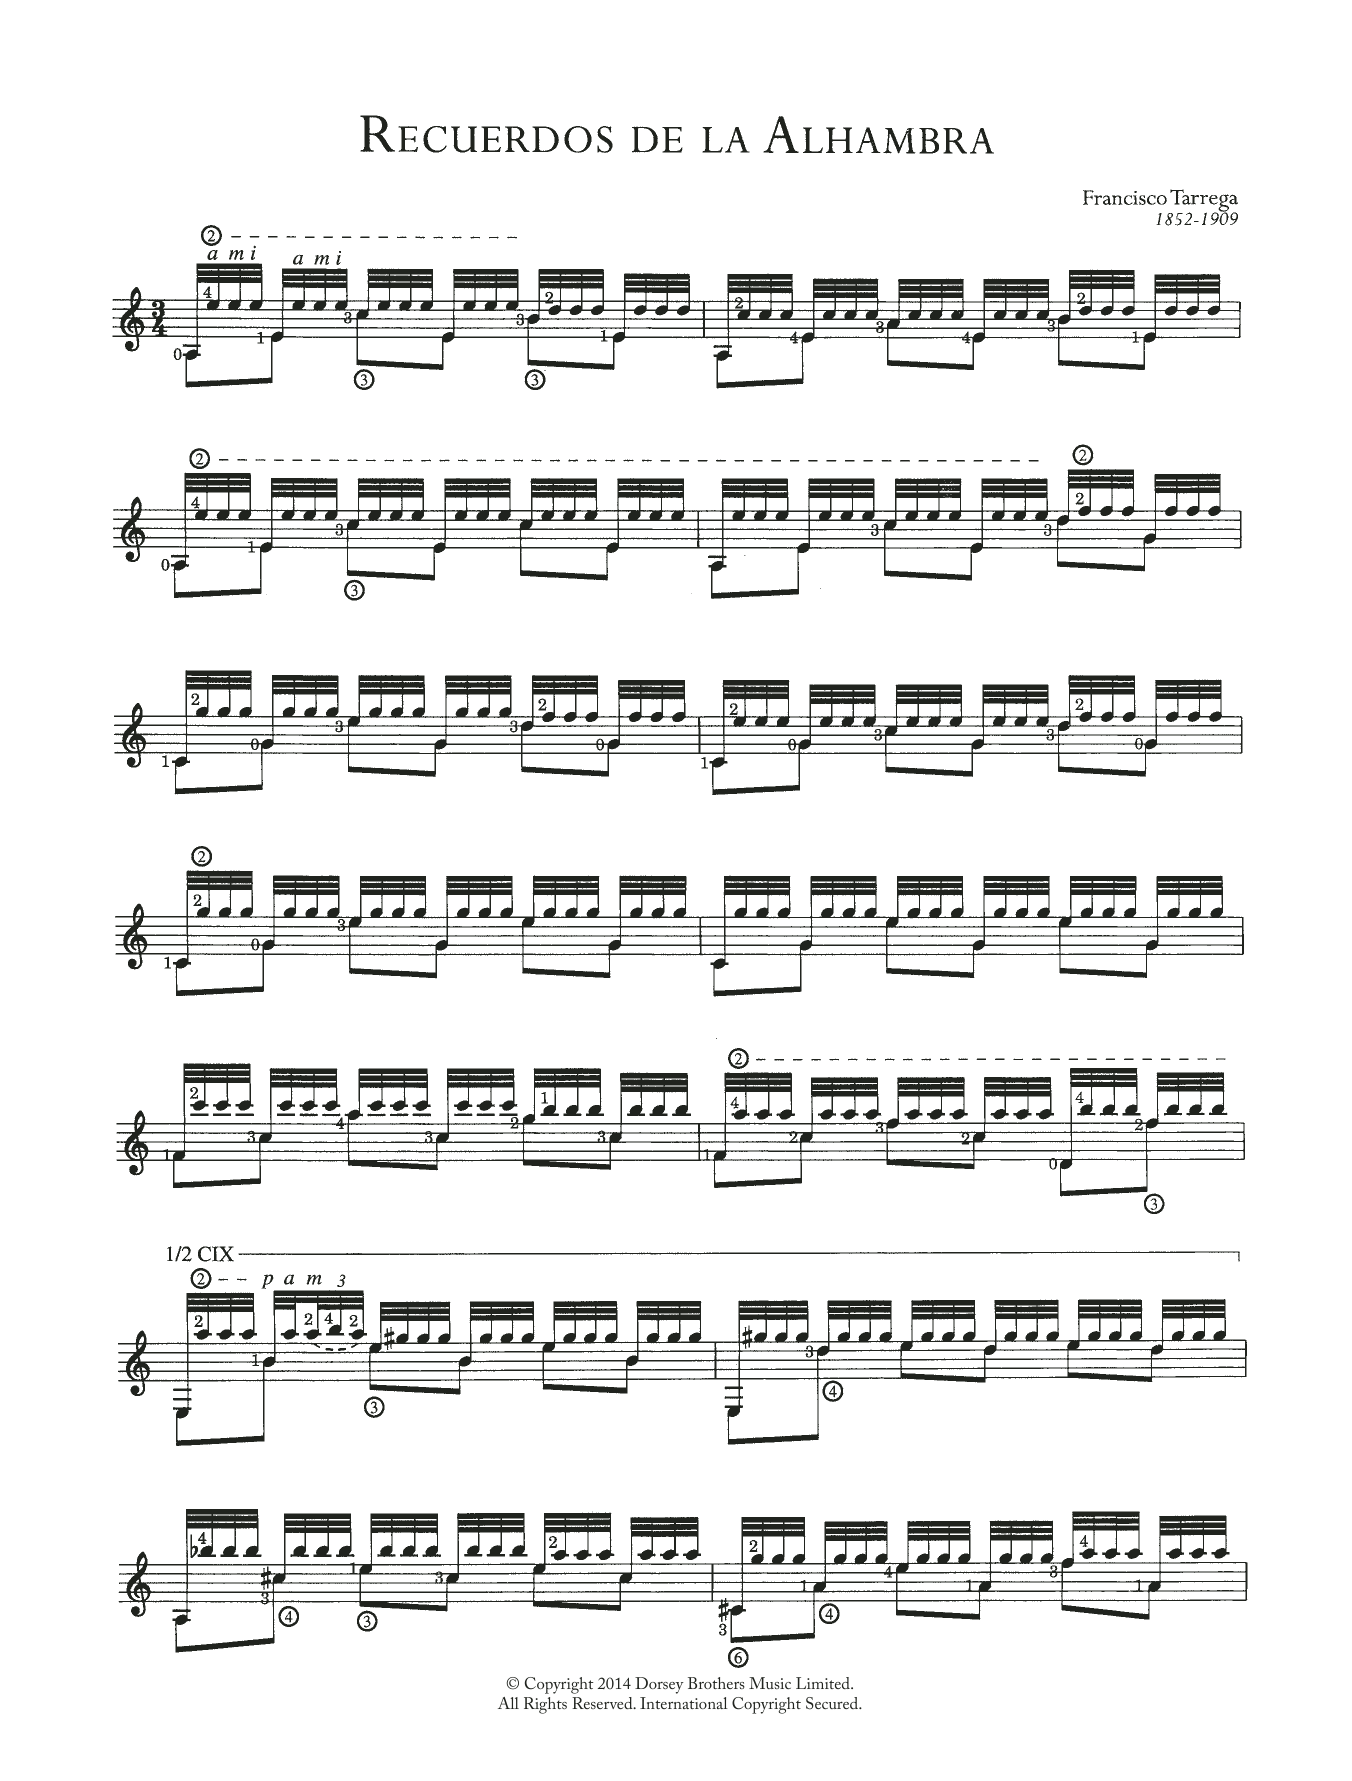 Francisco Tarrega Recuerdos de la Alhambra Sheet Music Notes & Chords for String Solo - Download or Print PDF